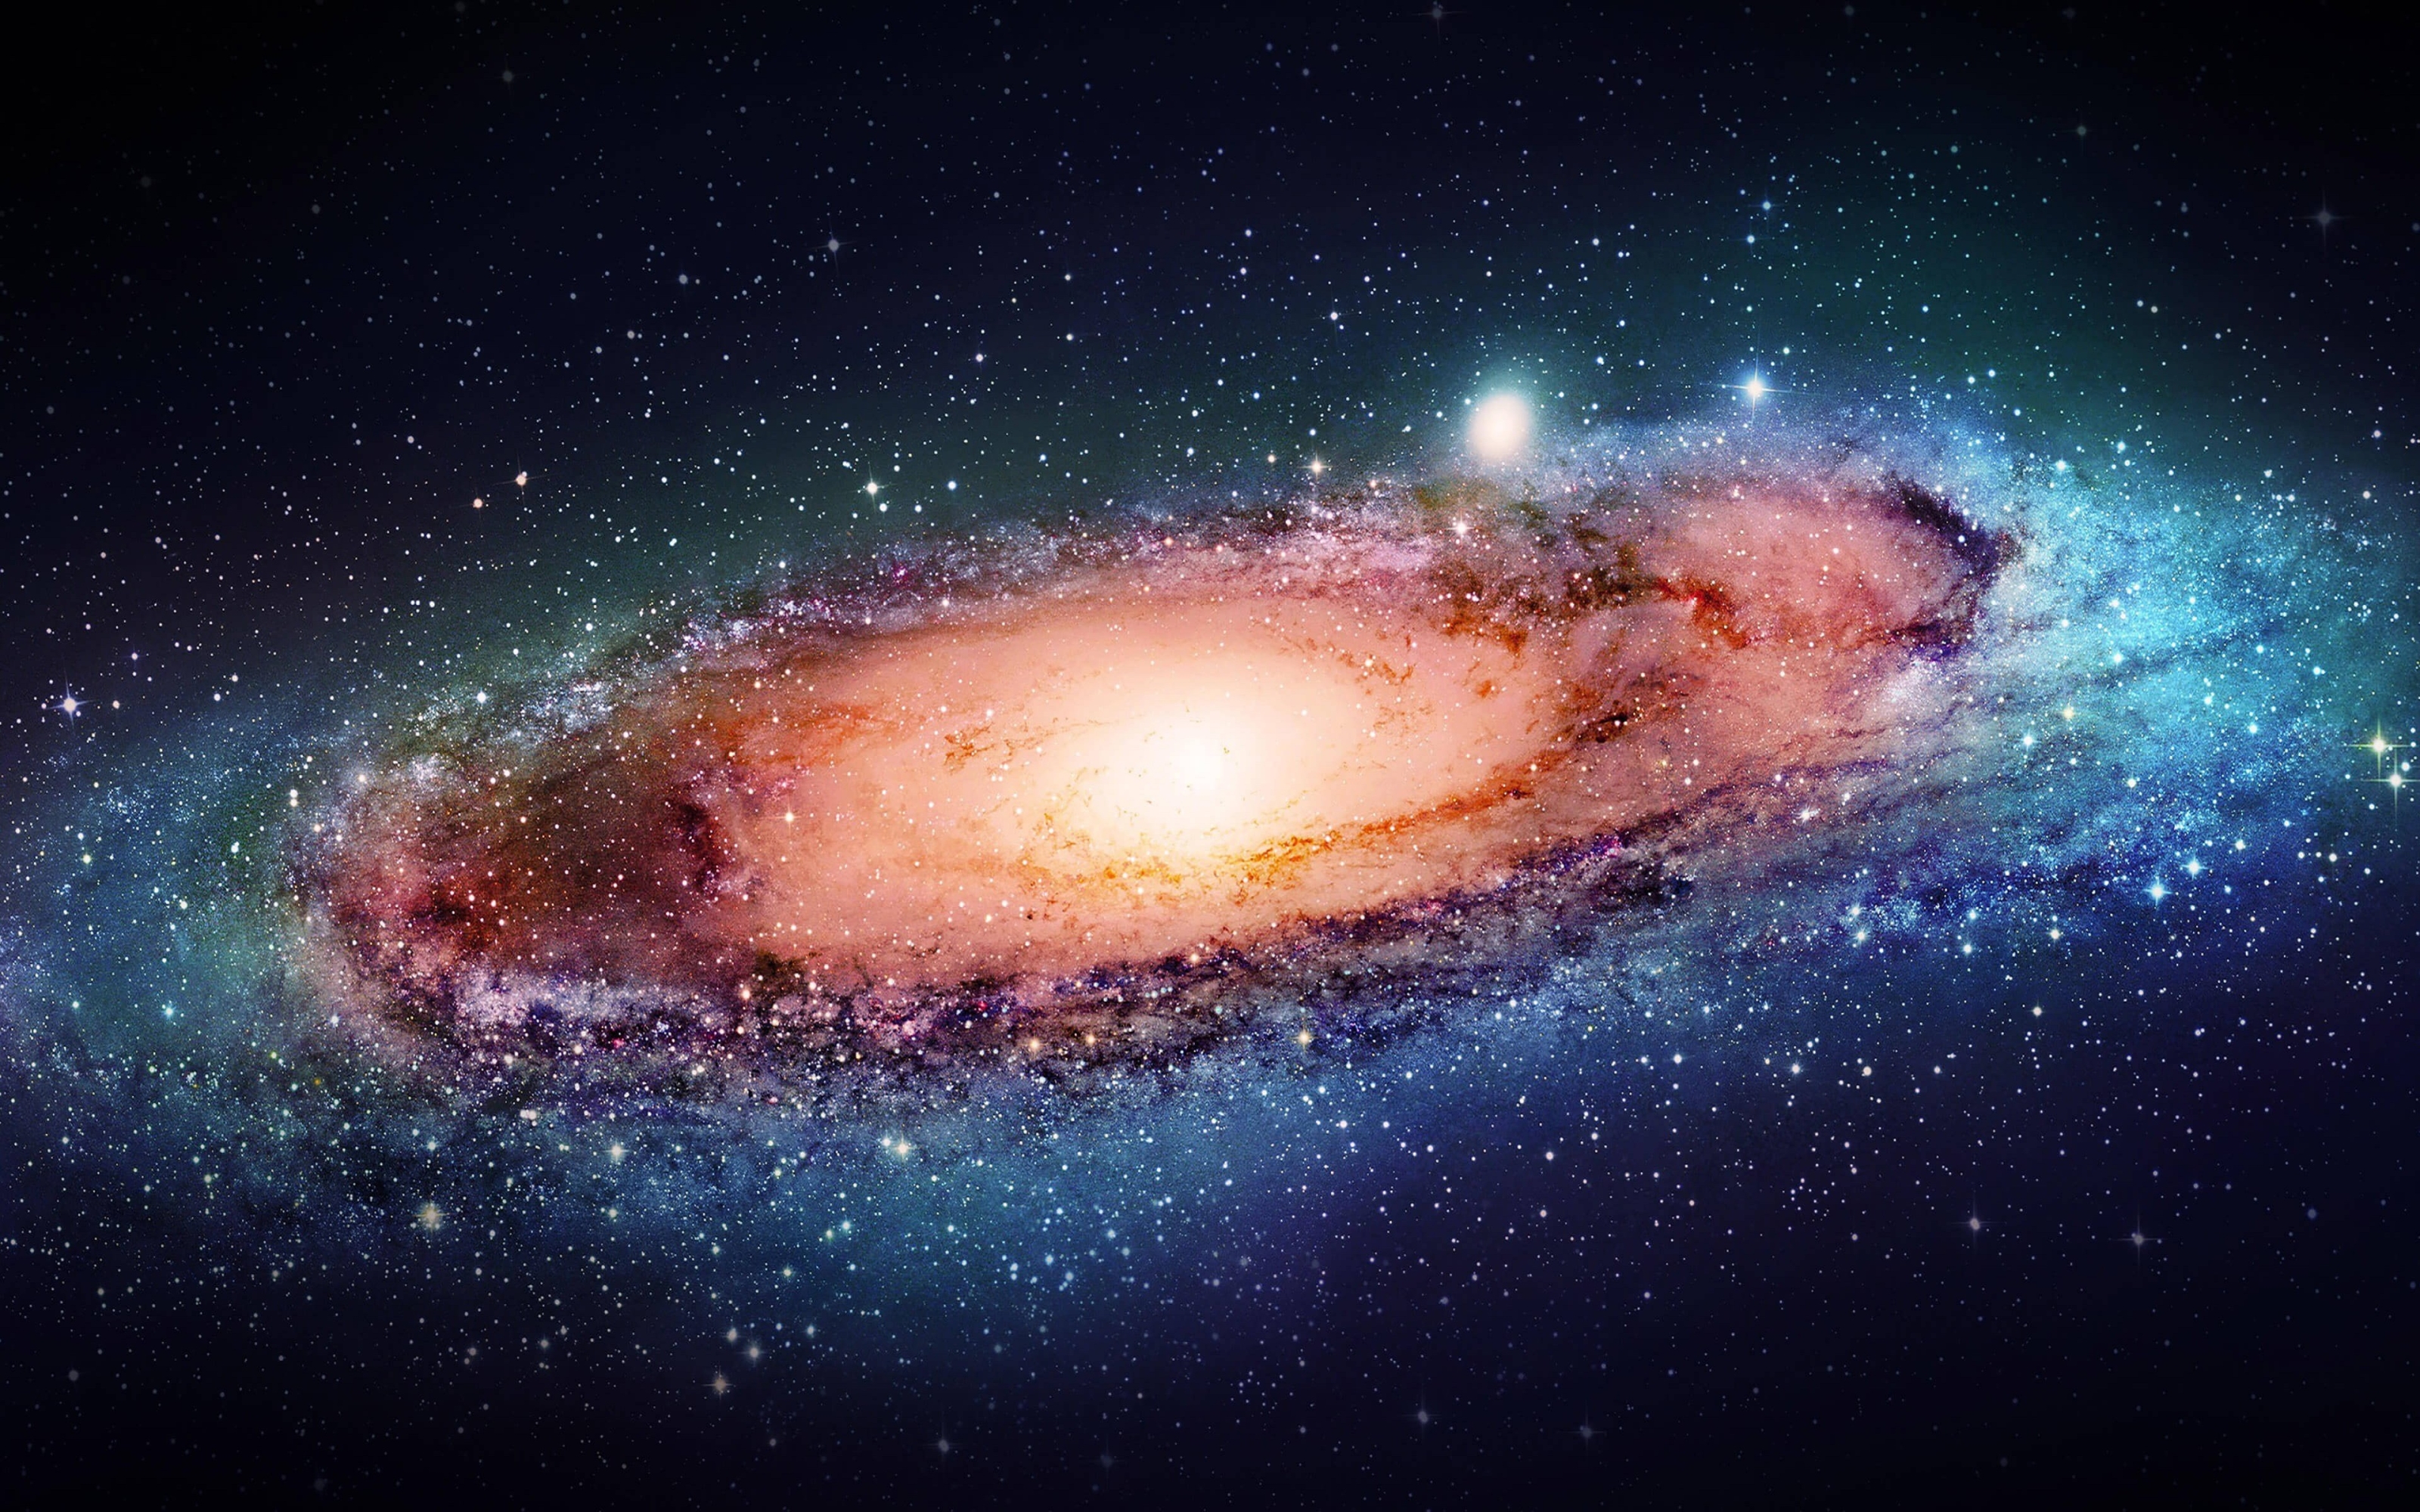 Milky Way Galaxy for 3200 x 2000 Wide Retina Display resolution